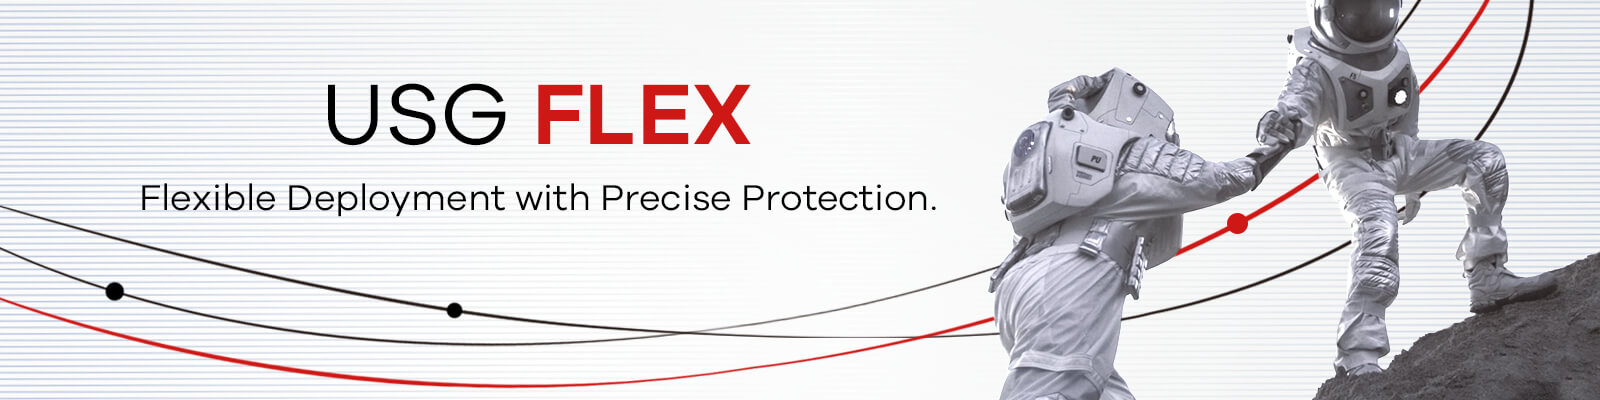 USG FLEX, Precise Protection. Flexible Subscription.